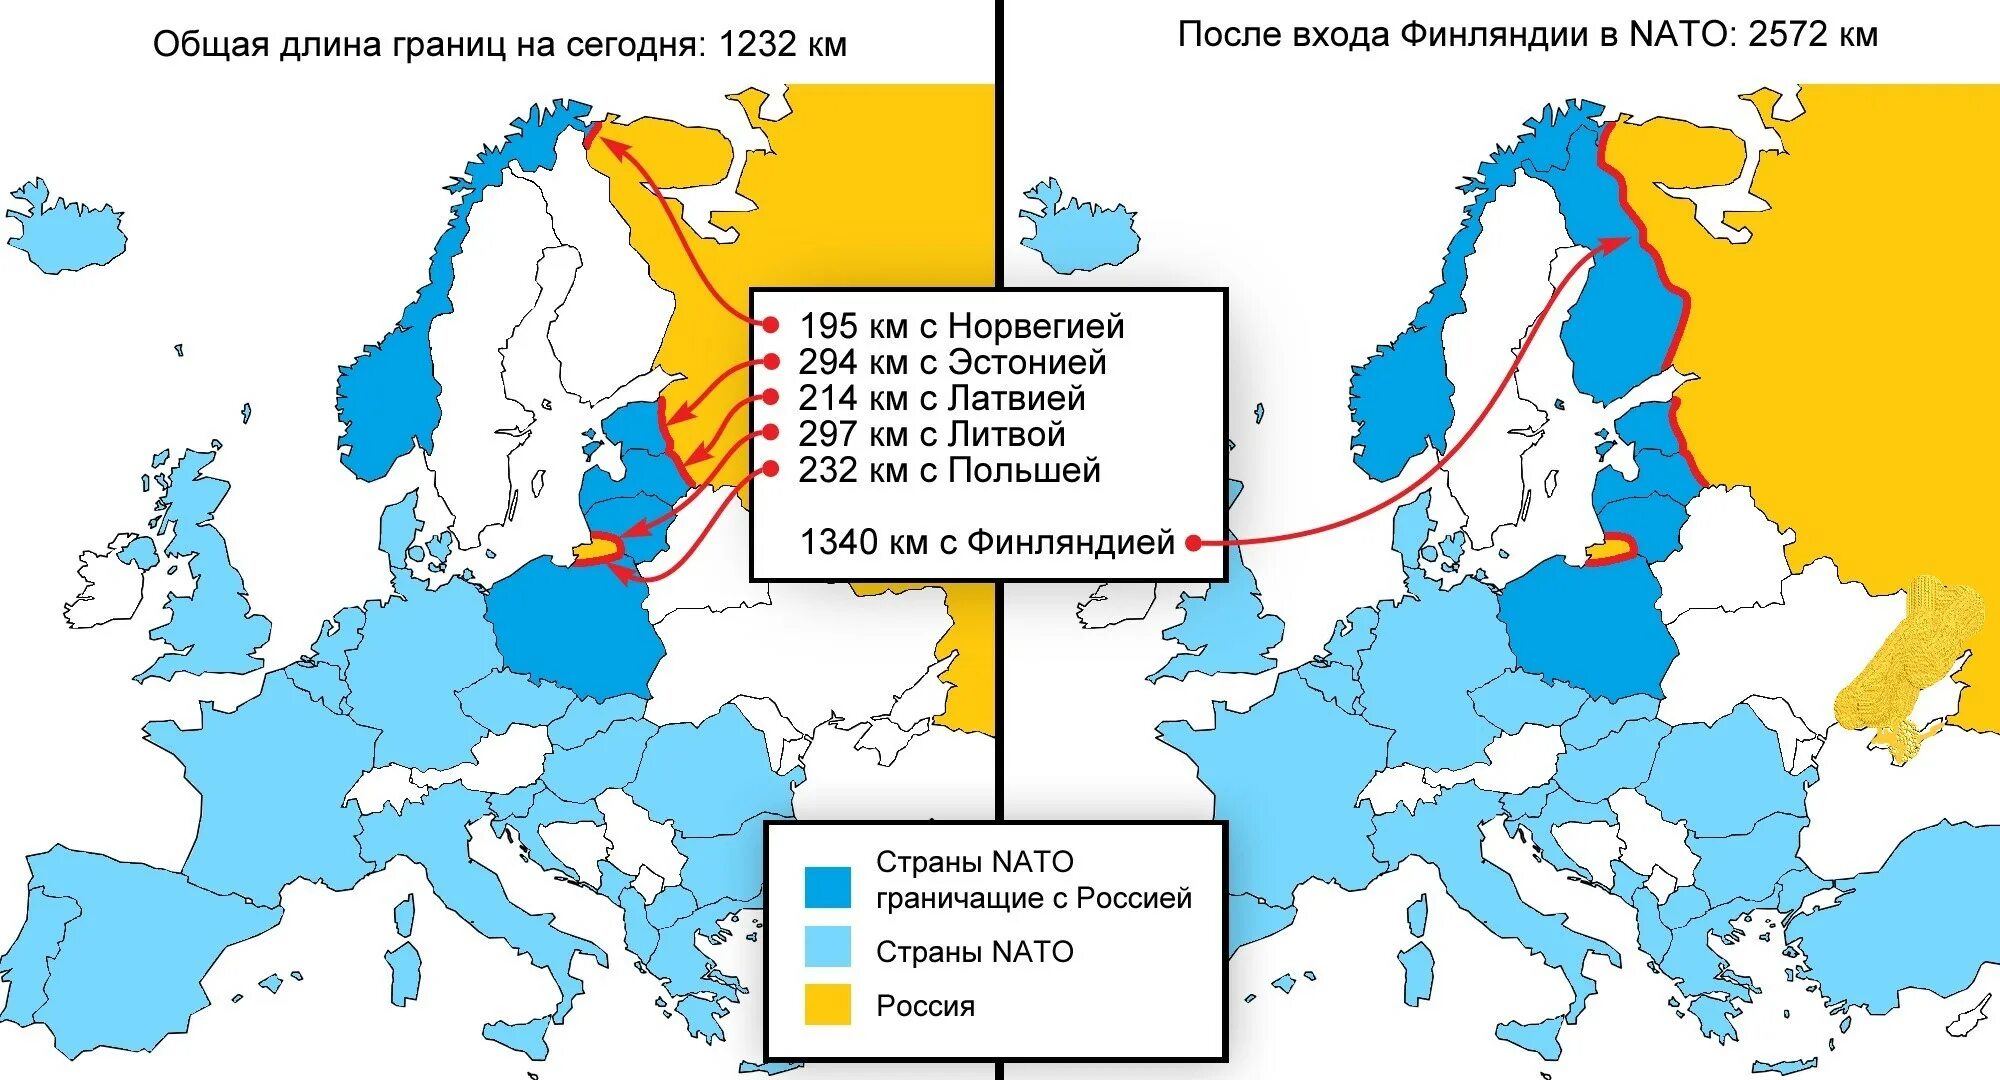 Граница НАТО Финляндия. Границы НАТО. Финляндия в НАТО граница с Россией. НАТО У границ России.